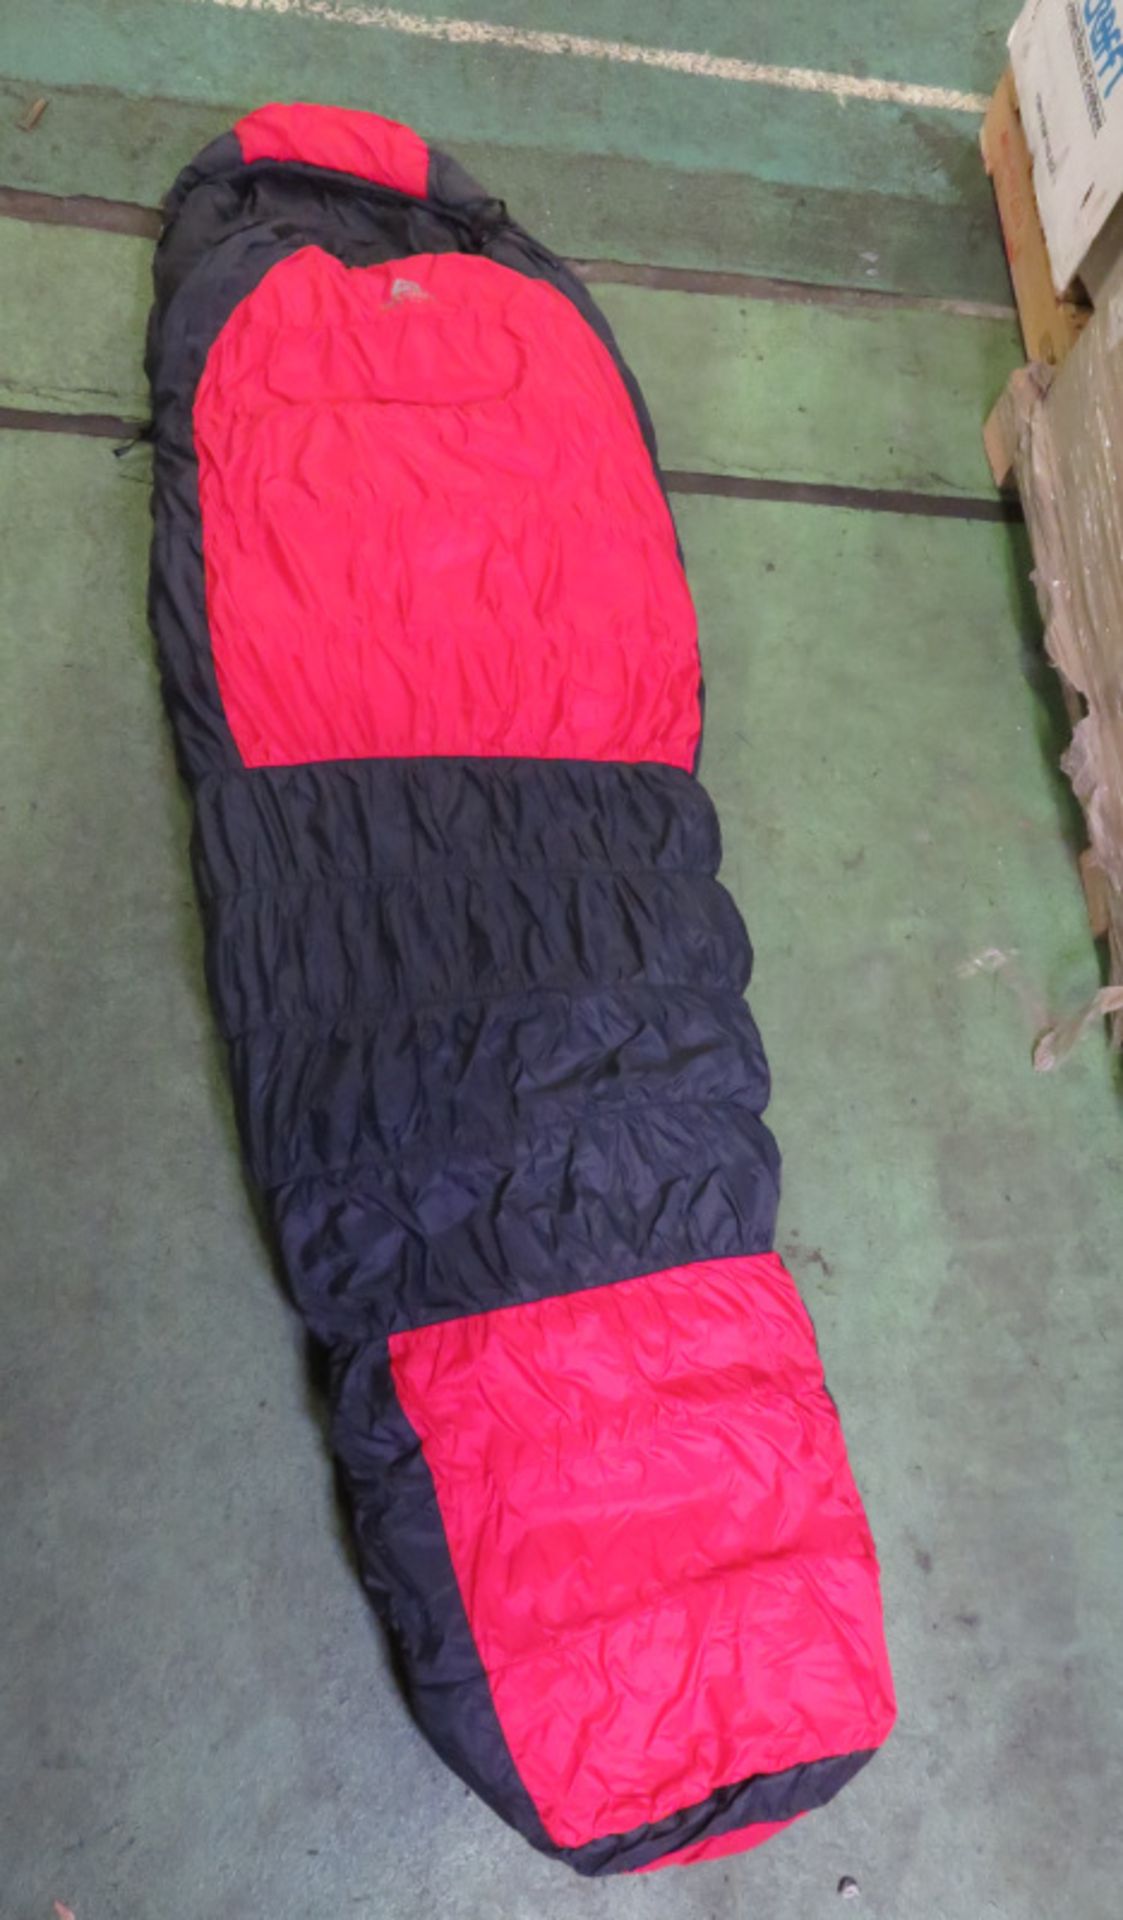 Mountain Equipment Iceline Sleeping Bag - red & black - Image 2 of 2